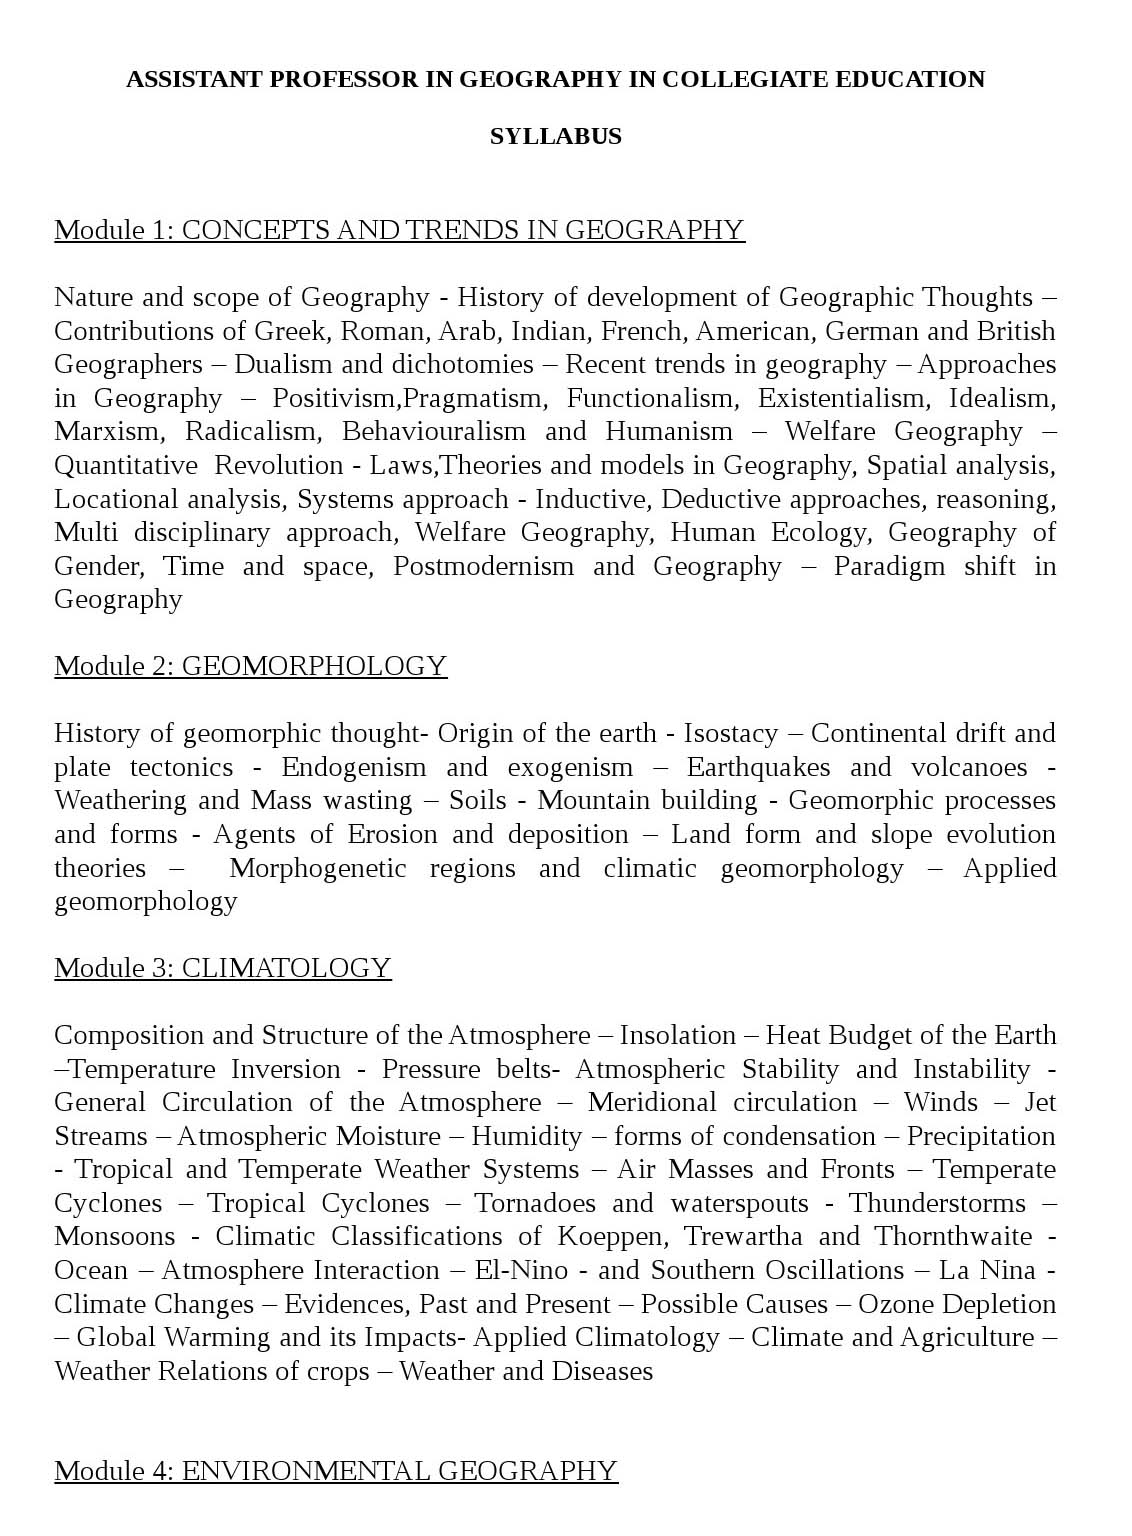 Kerala PSC Assistant Professor Geography Exam Syllabus - Notification Image 1